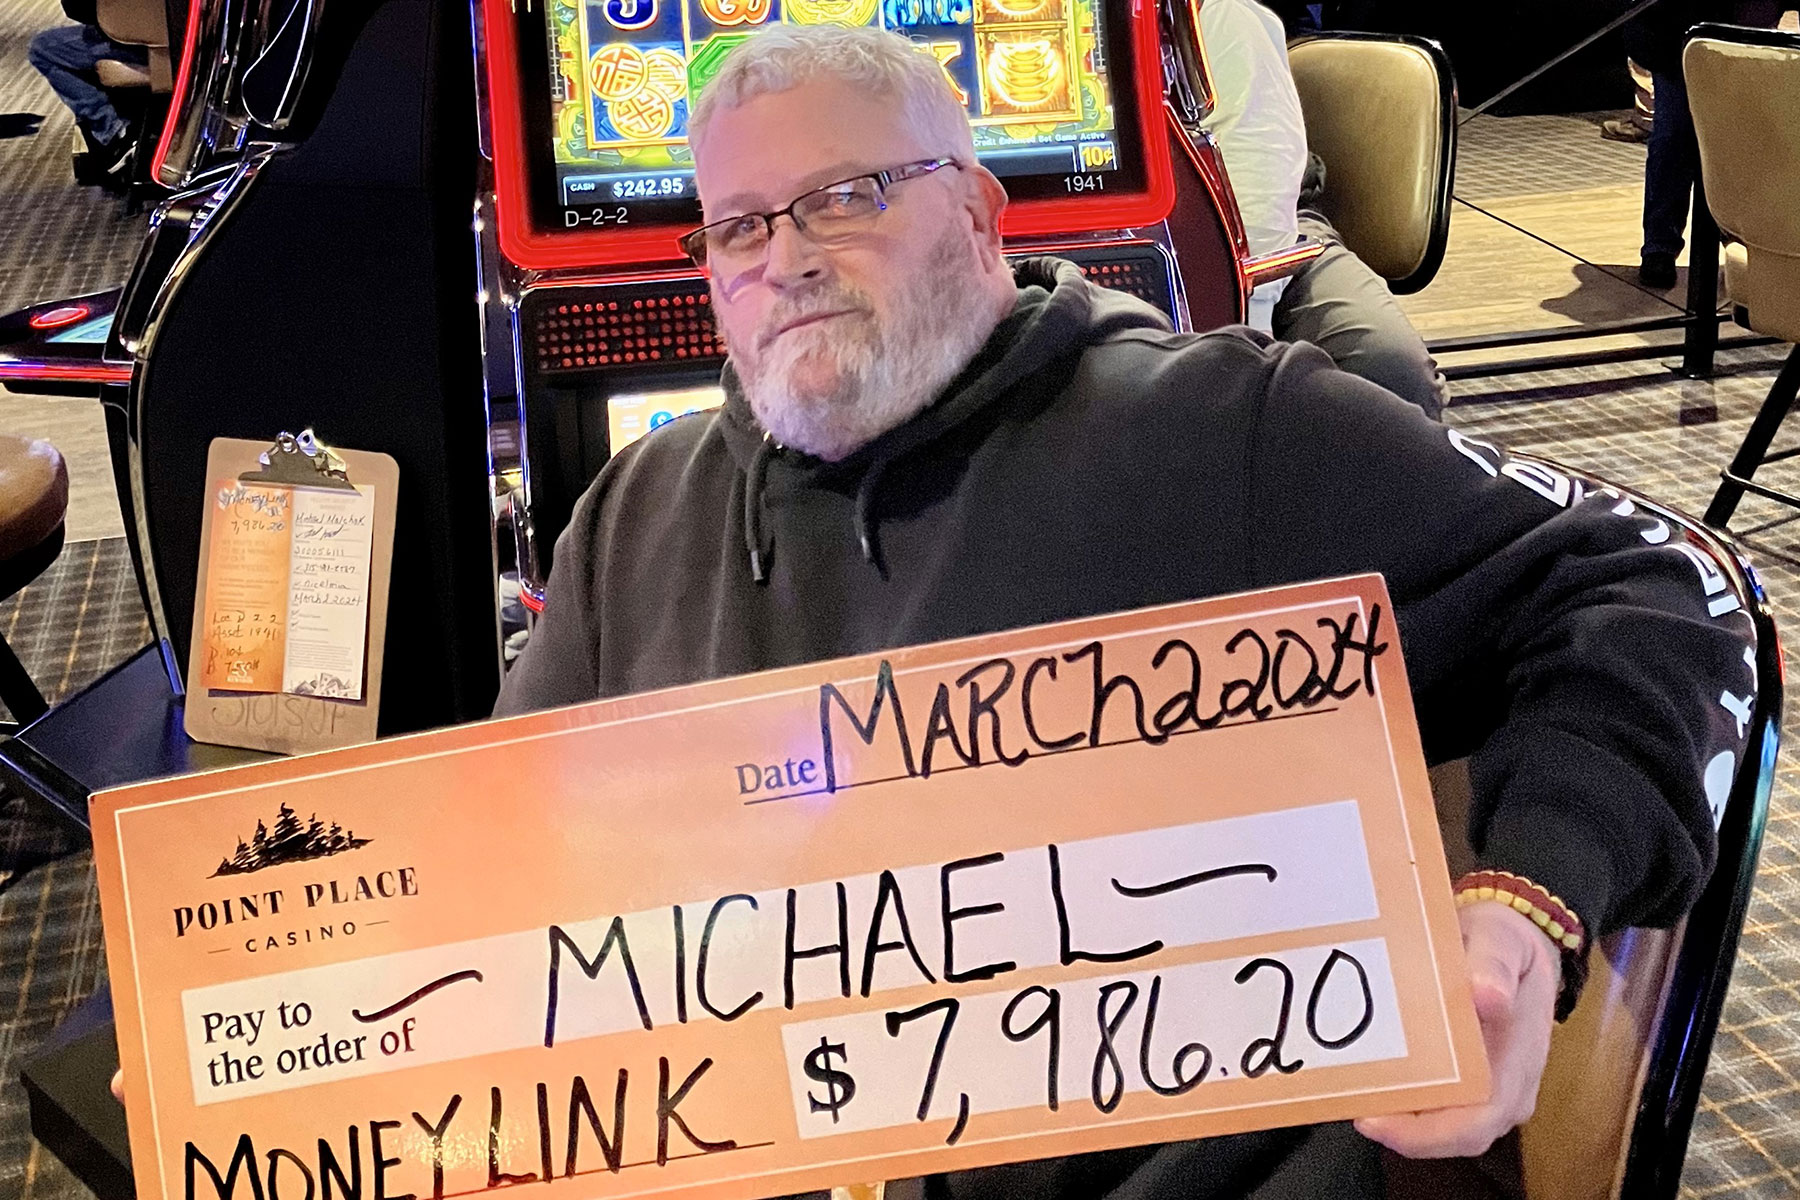 Michael won $7,986